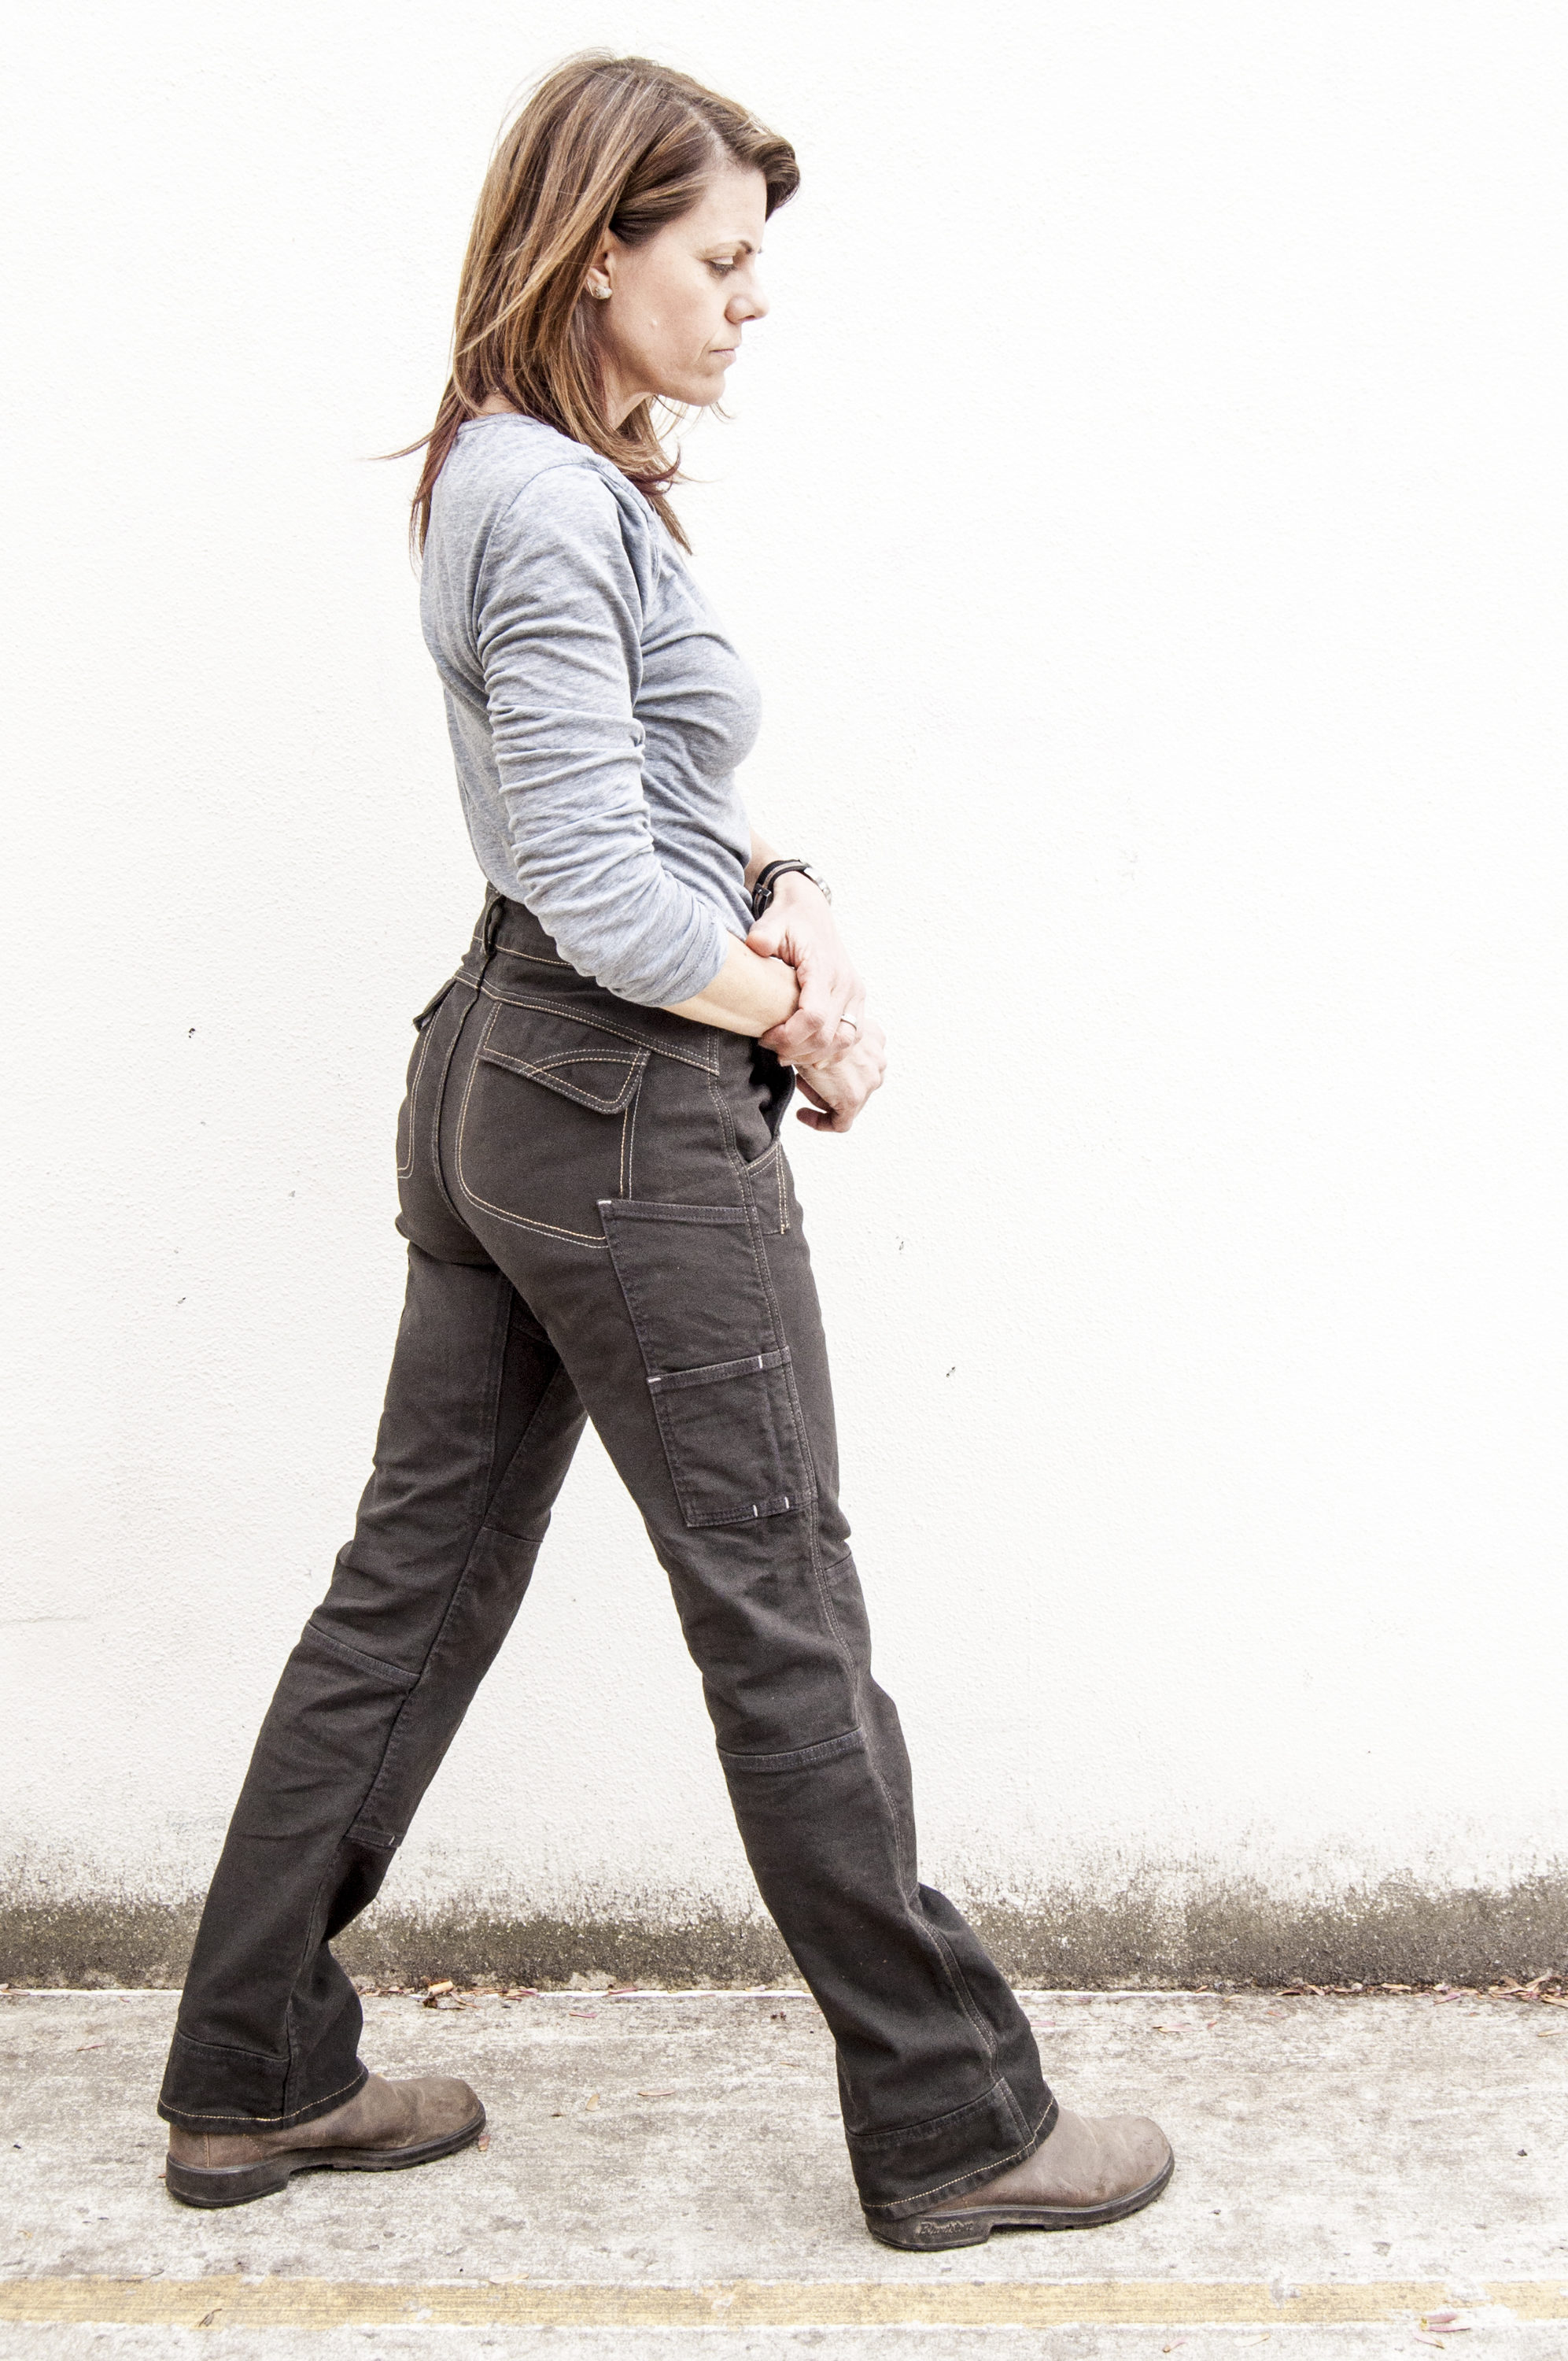 Dovetail Workwear Women's Saddle Brown Canvas Work Pants (6 X 32